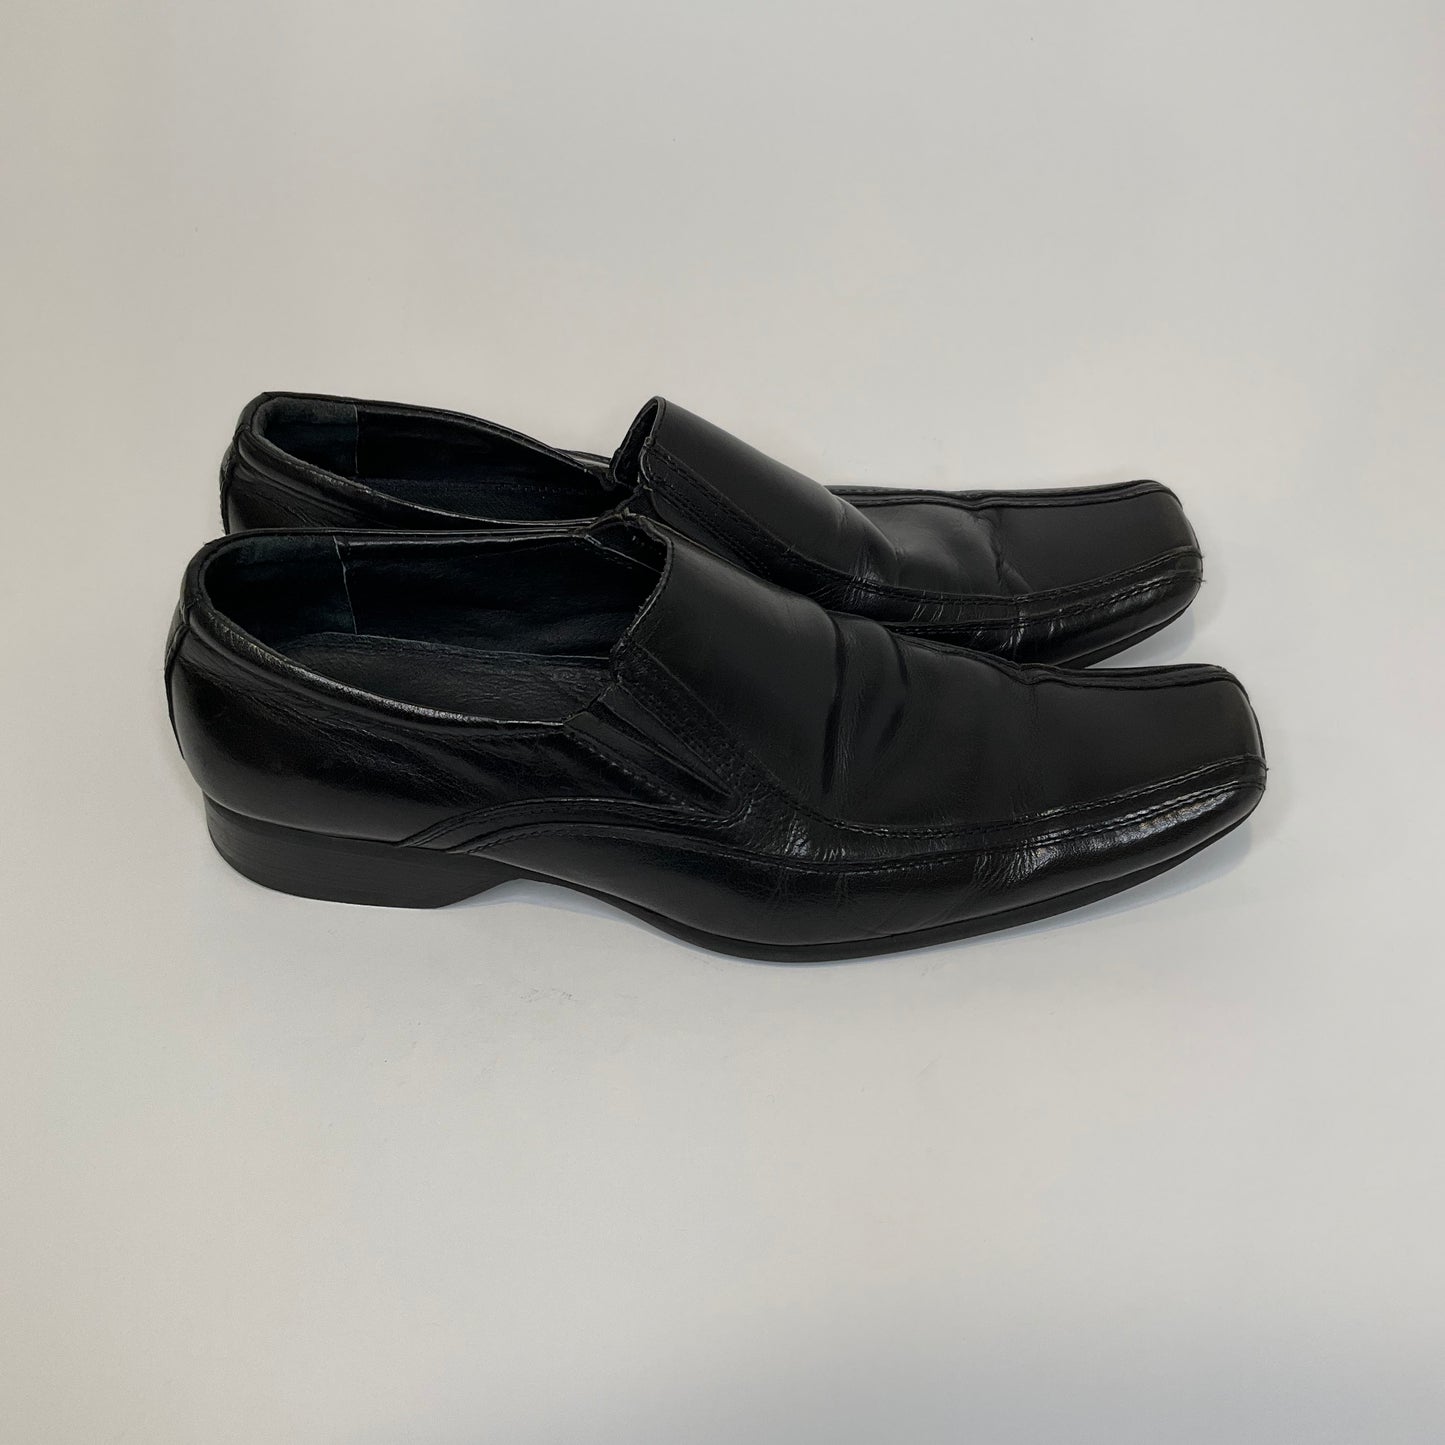 San Crispin - Shoes - Size 9